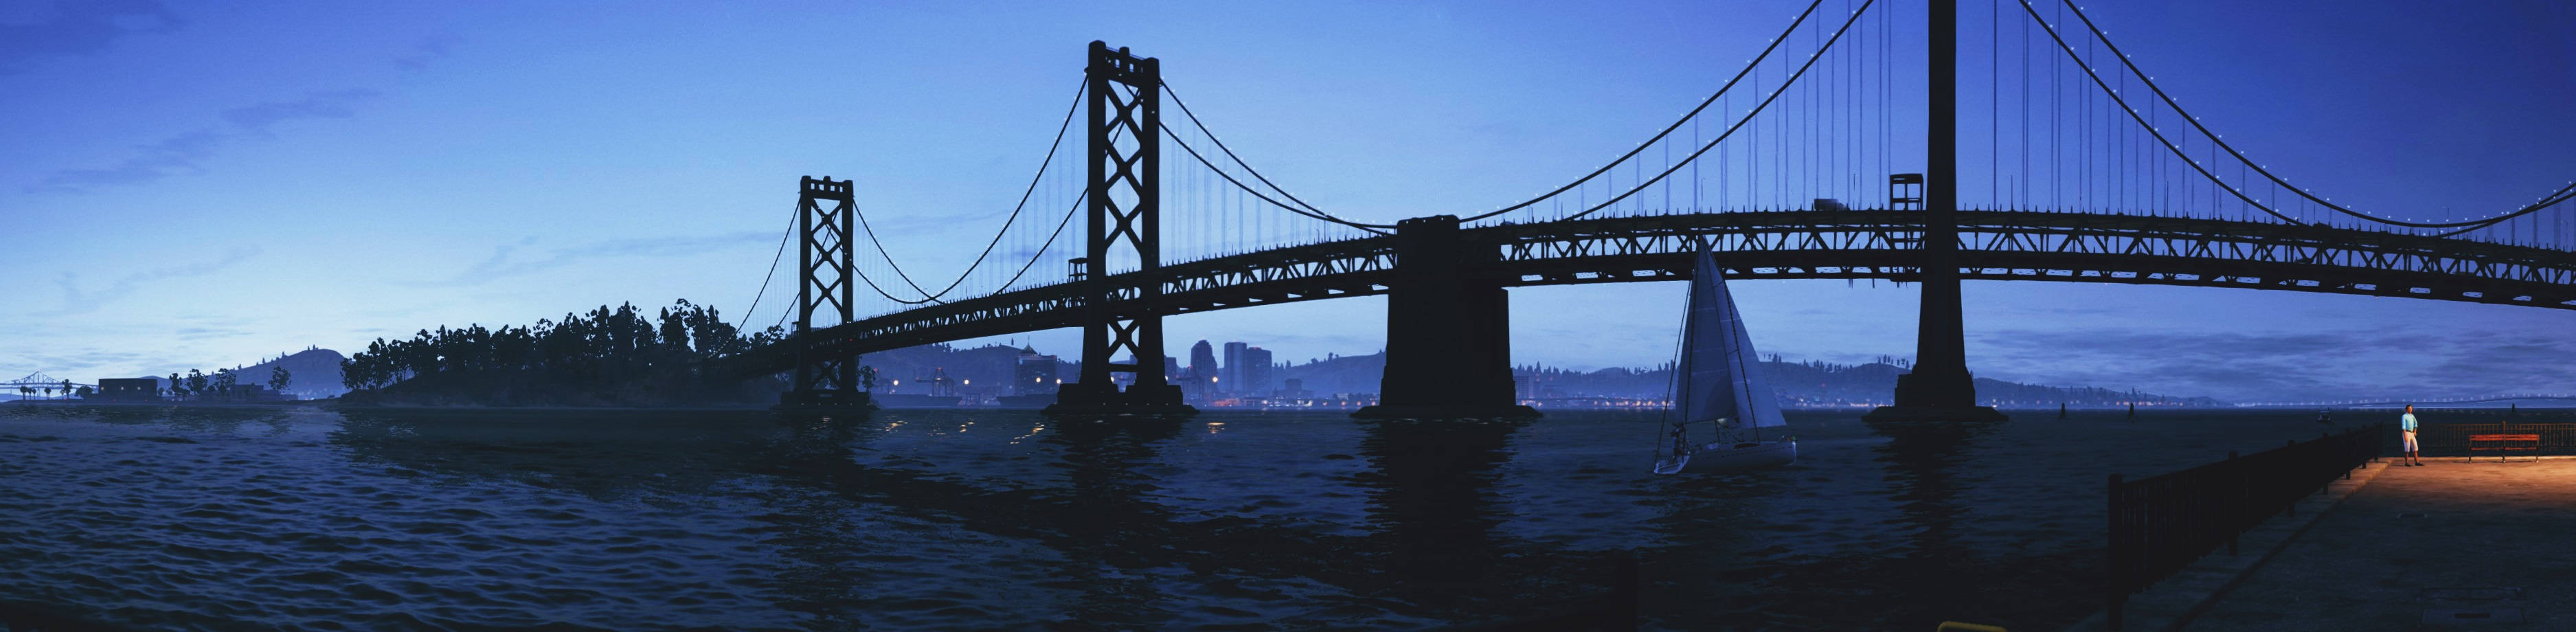 Panorama Bridge San Francisco Photography Wallpaper